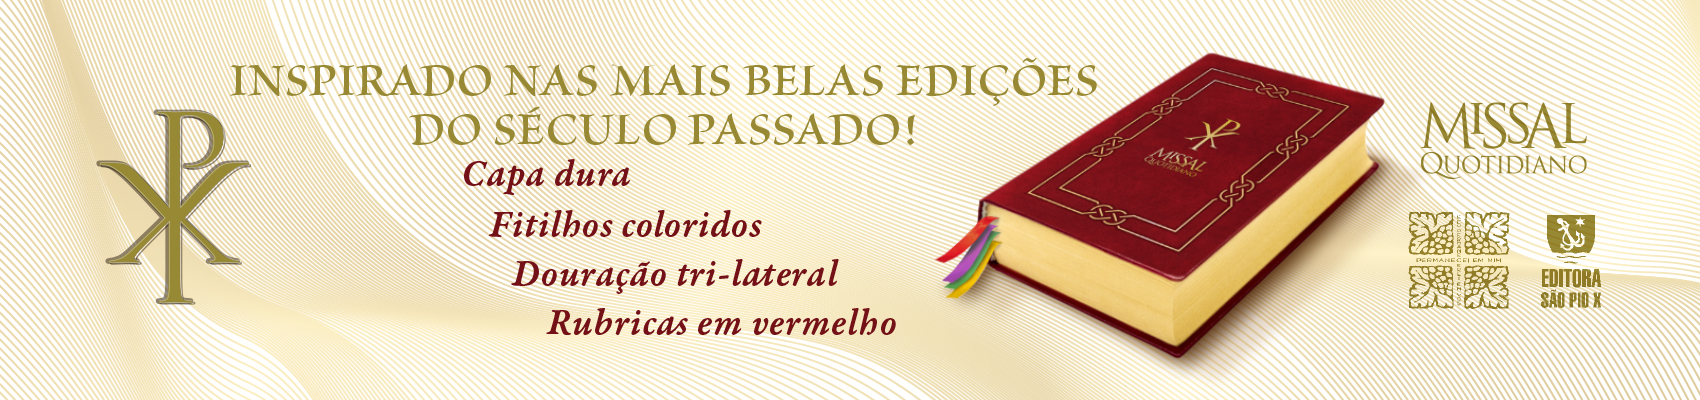 Pré-Venda Missal Quotidiano Latim-Português